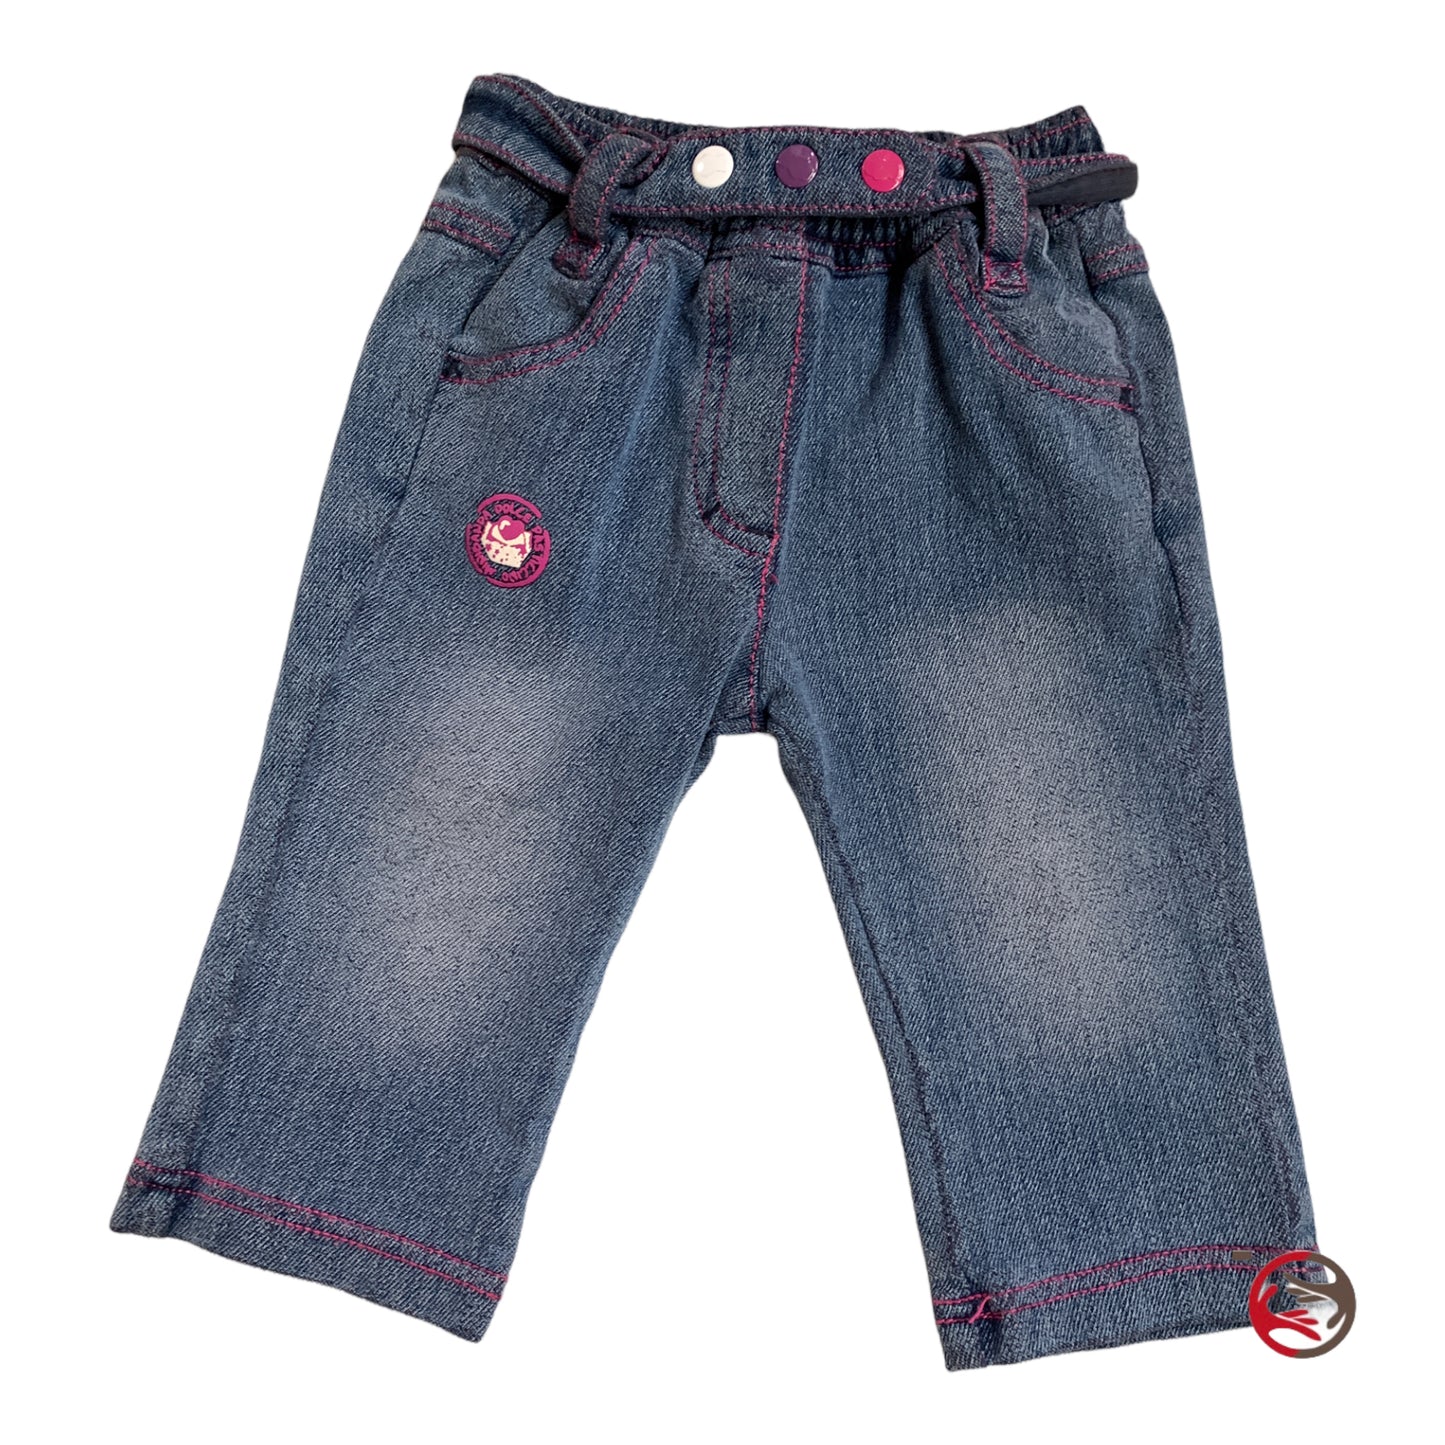 Jeans Pantaloni bambina Minibanda 6 mesi